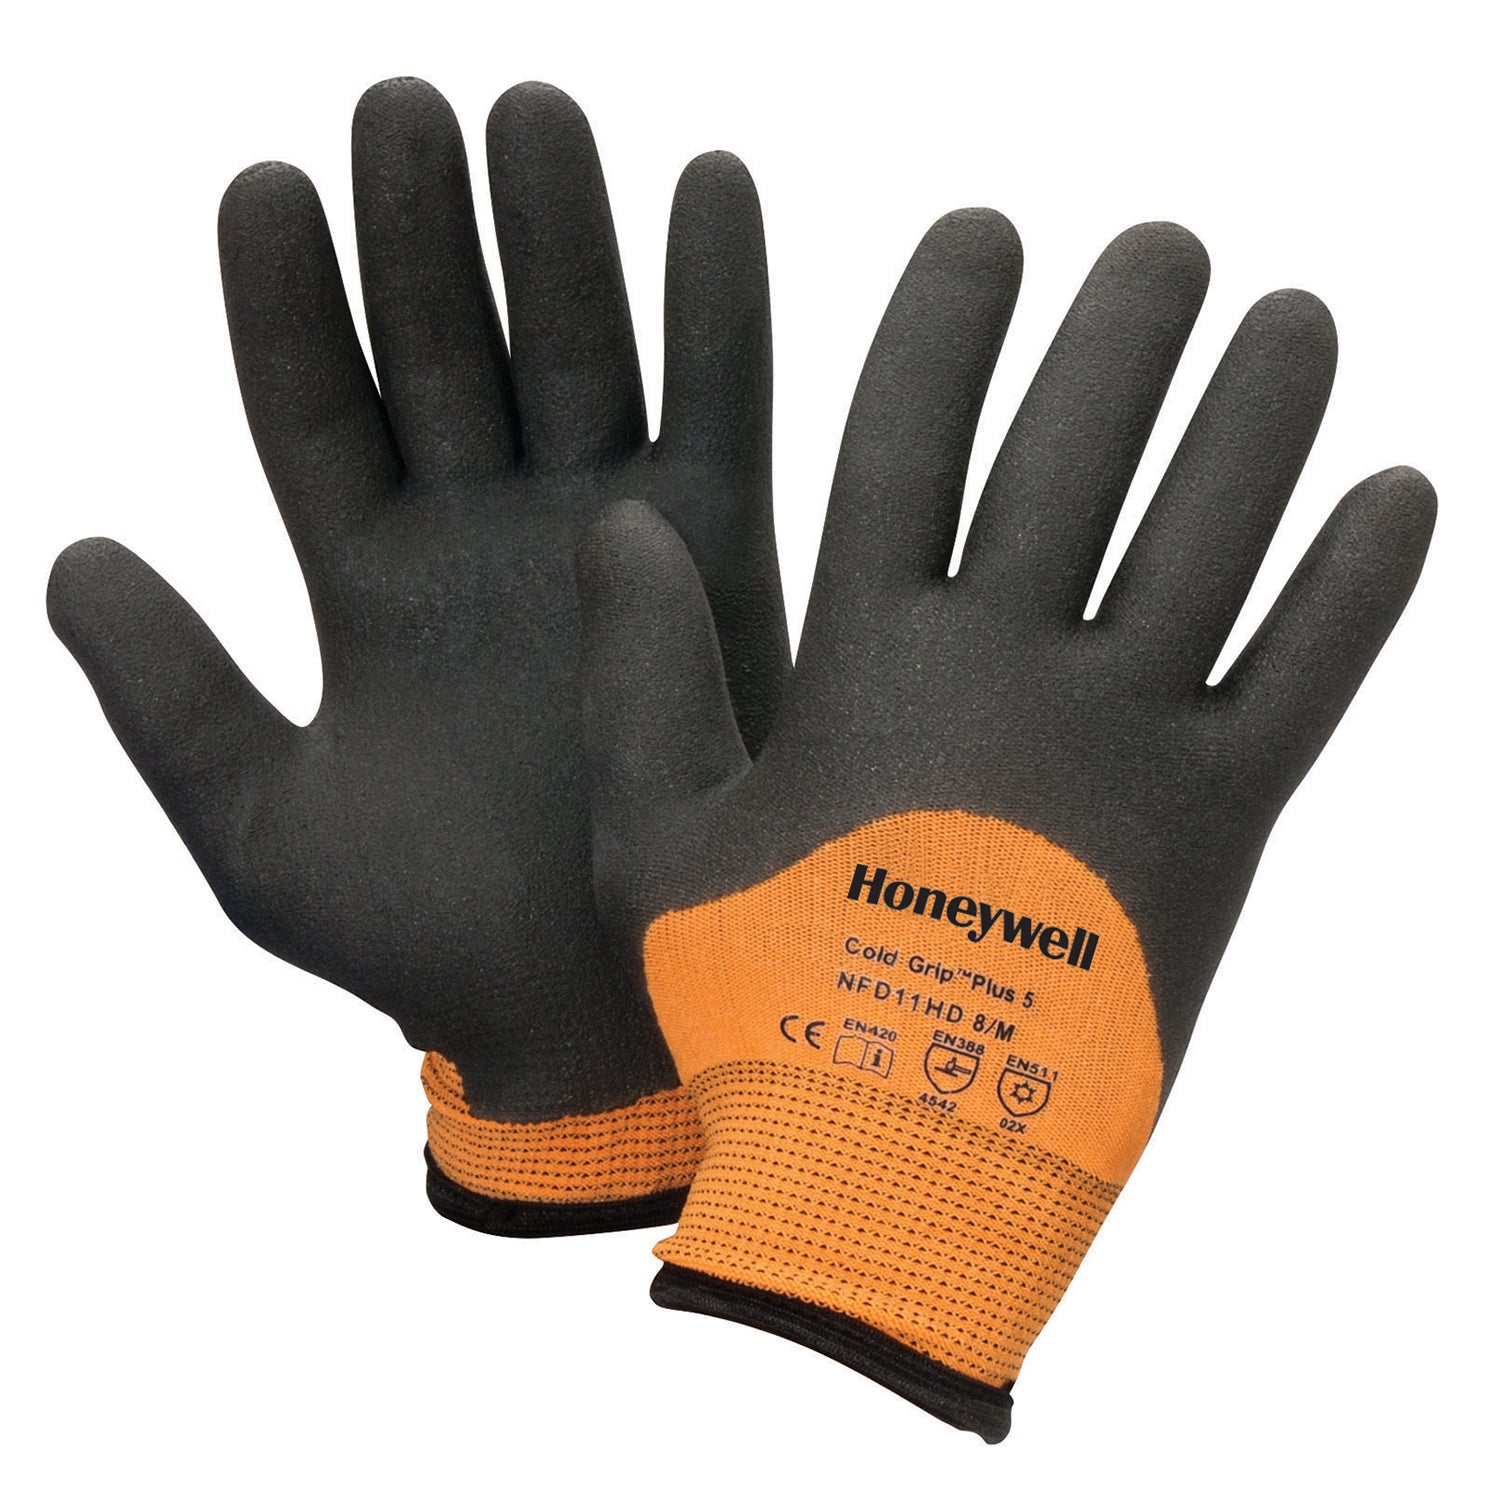 Honeywell NFD11HD Cold Grip Plus 5 Gloves